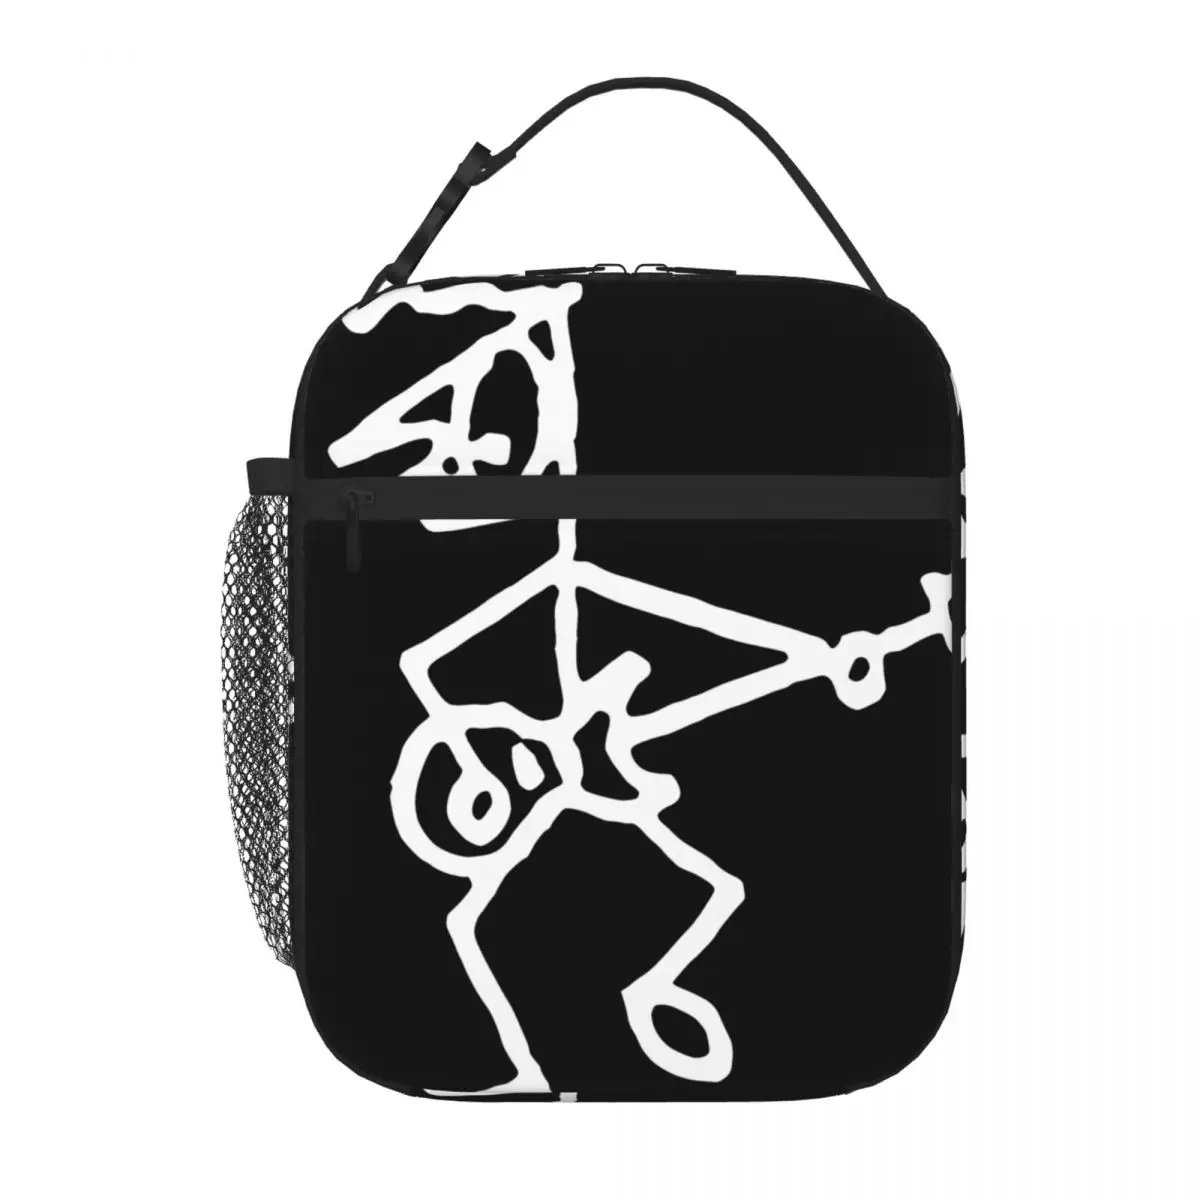 Сумка для ланча с логотипом Roly Grigio Vigore Rosendo, Ланчбокс, детская сумка для ланча, маленькая термосумка